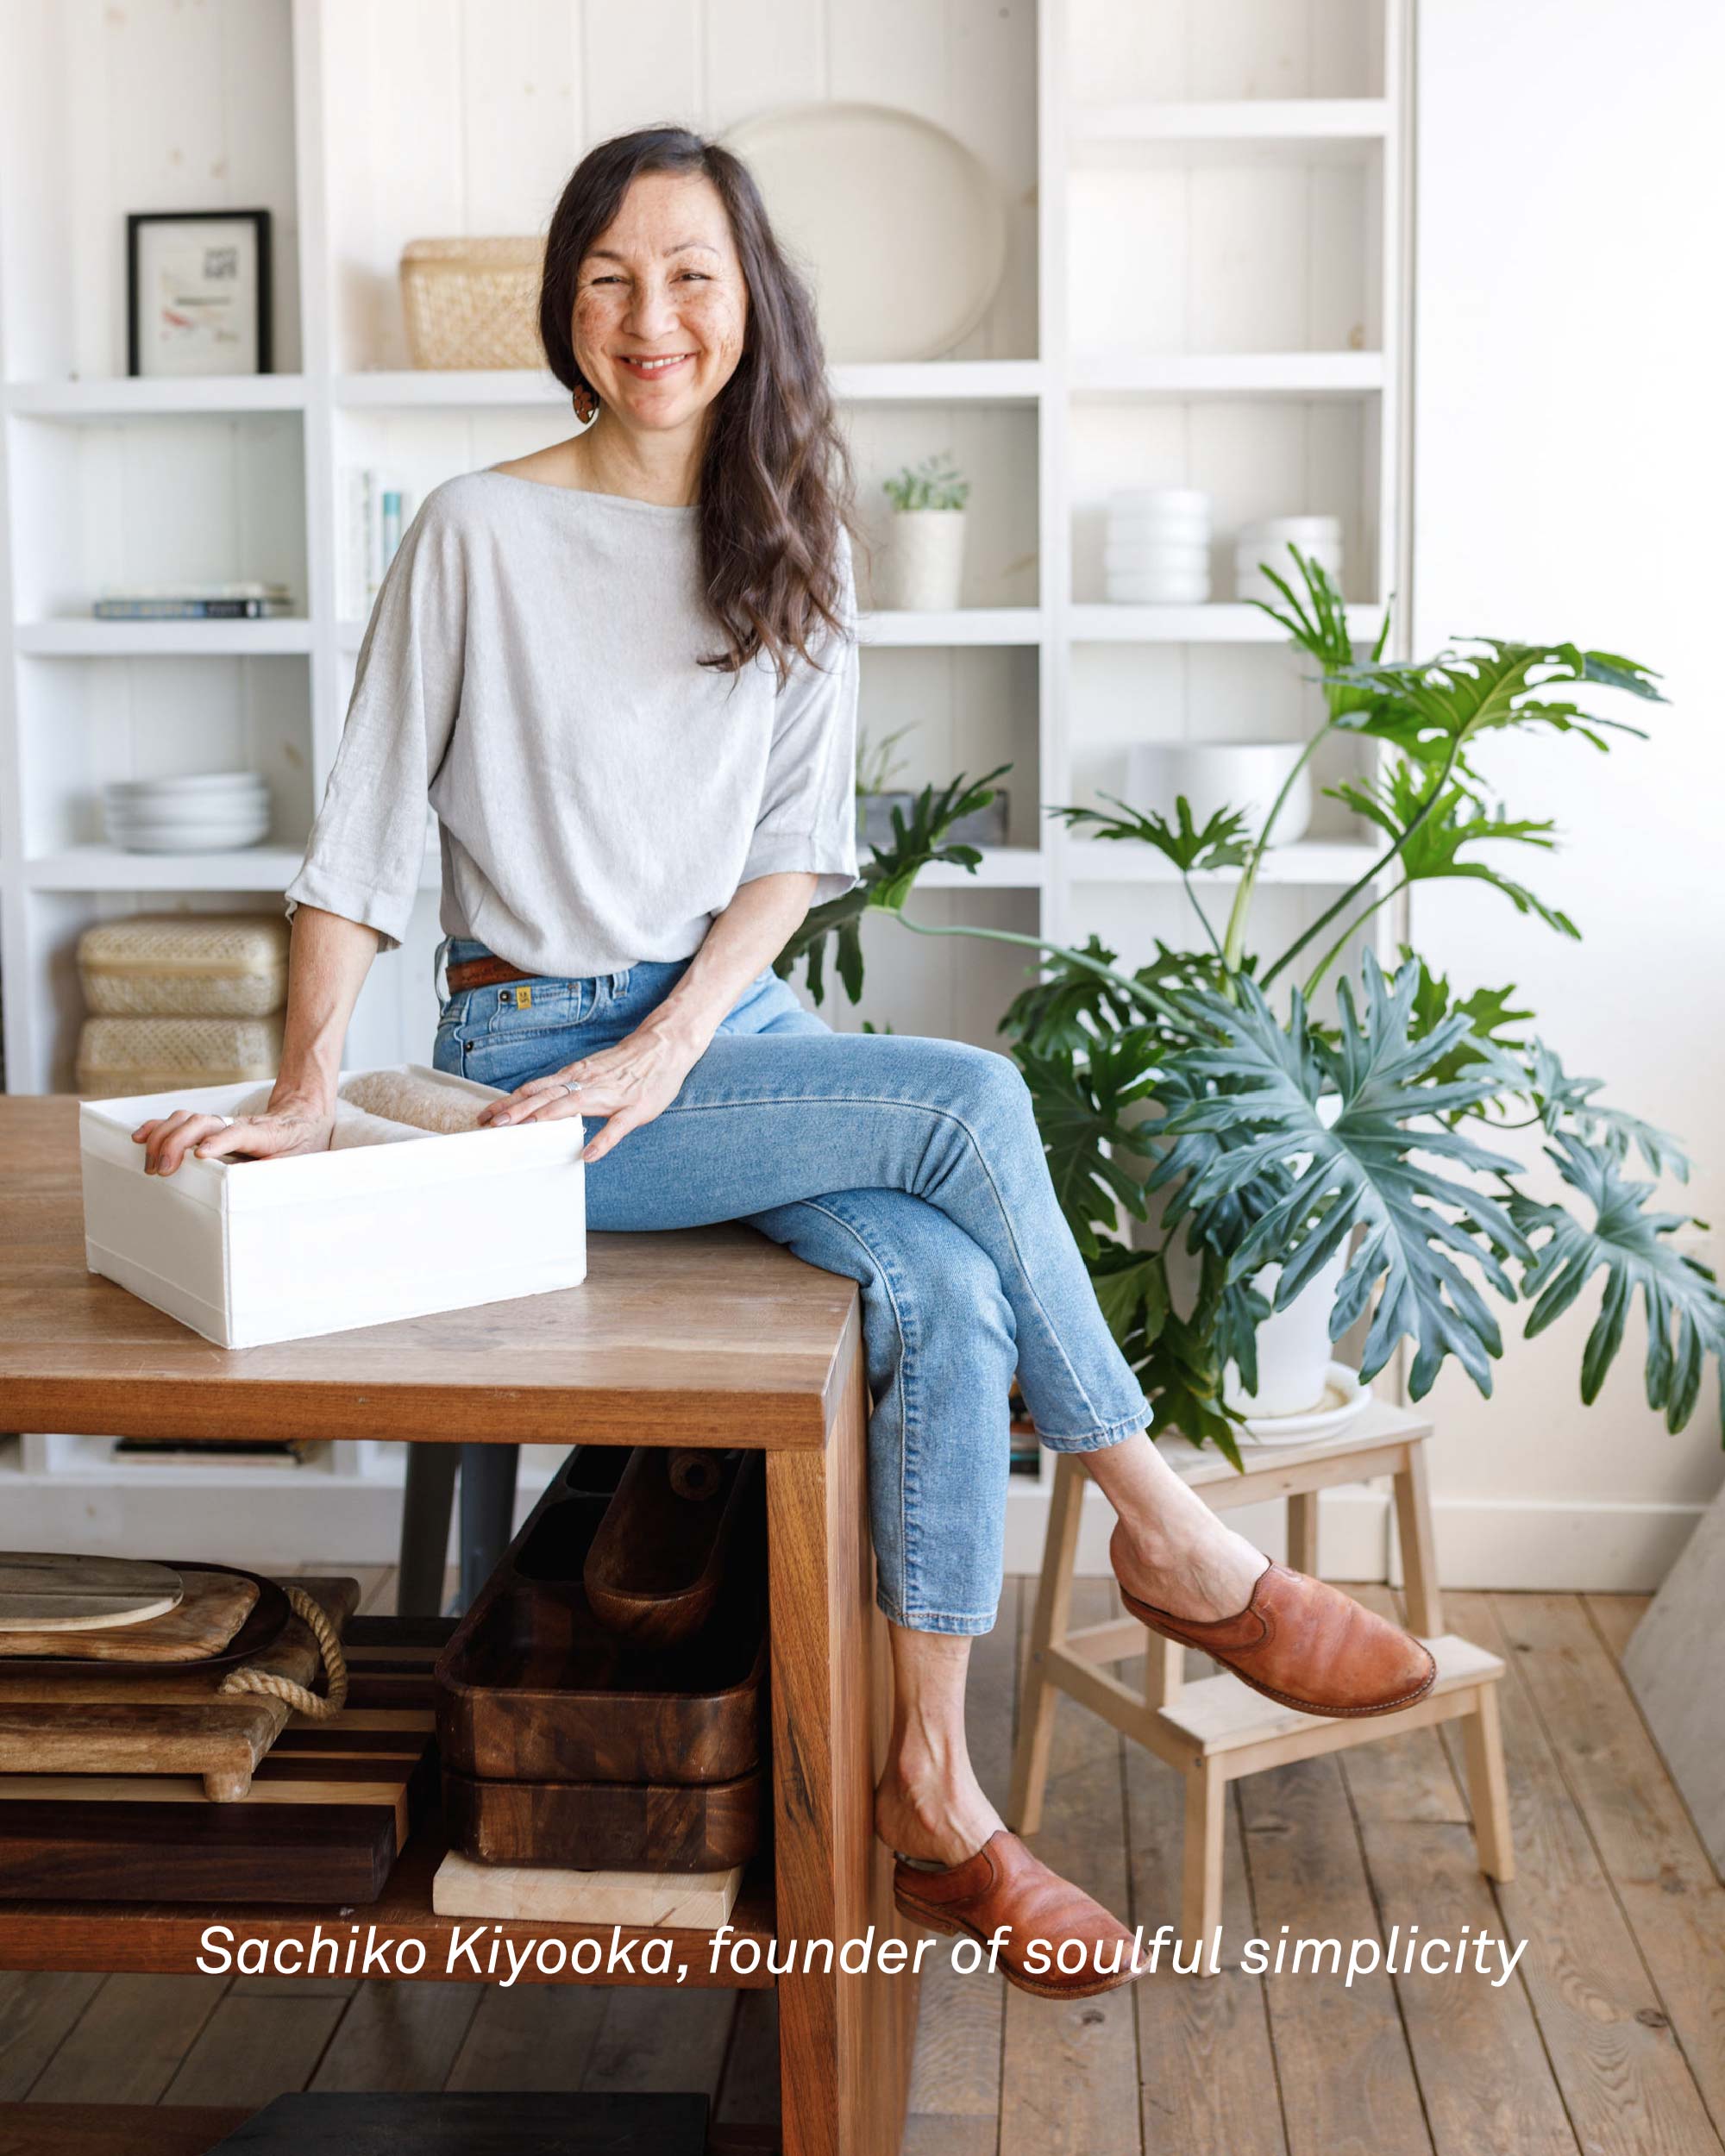 Sachiko Kiyooka of Soulful Simplicity